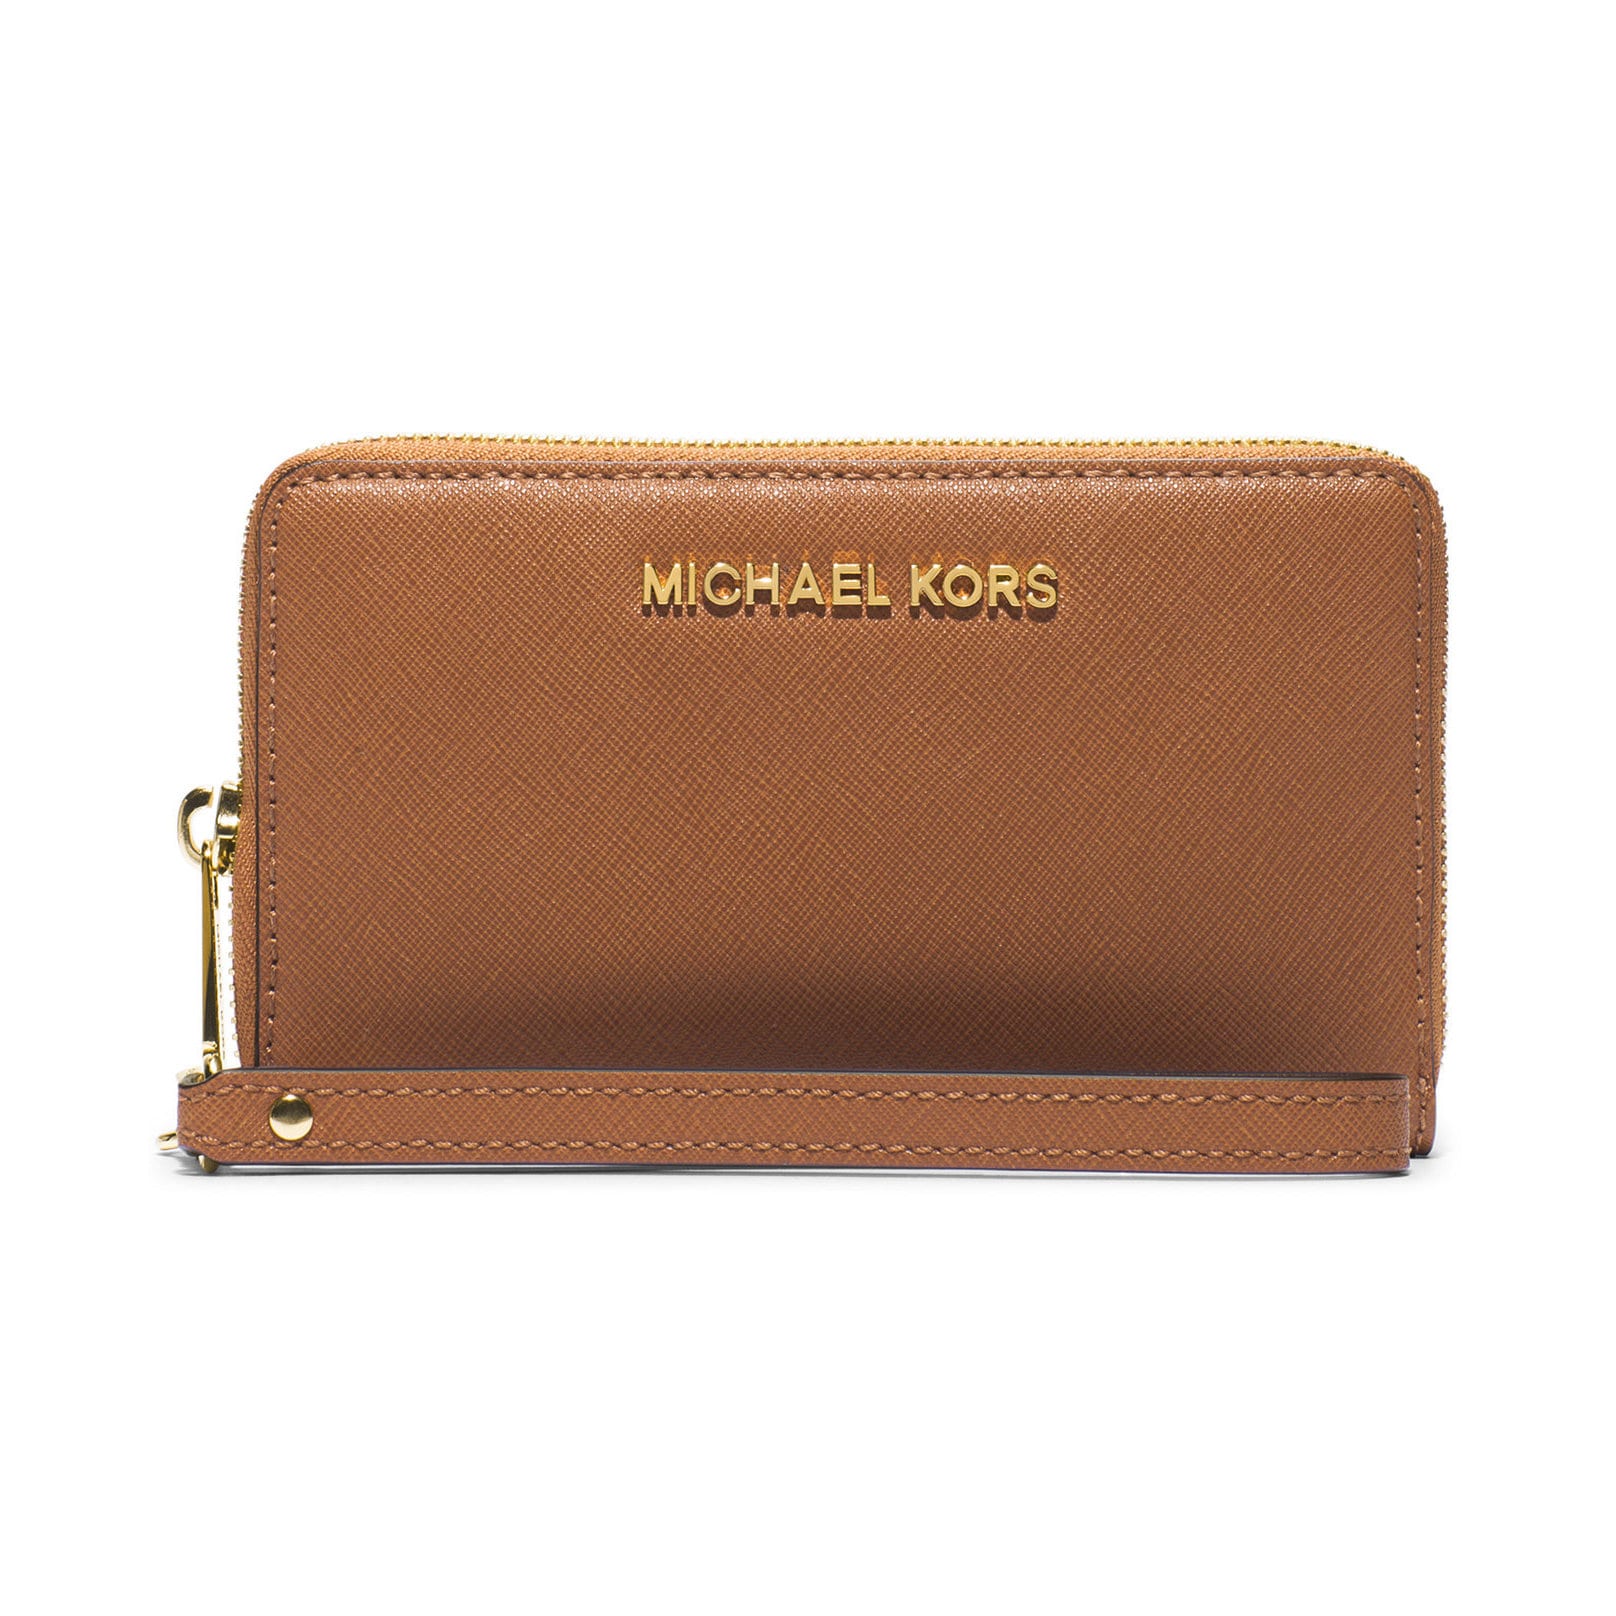 brown leather michael kors wallet